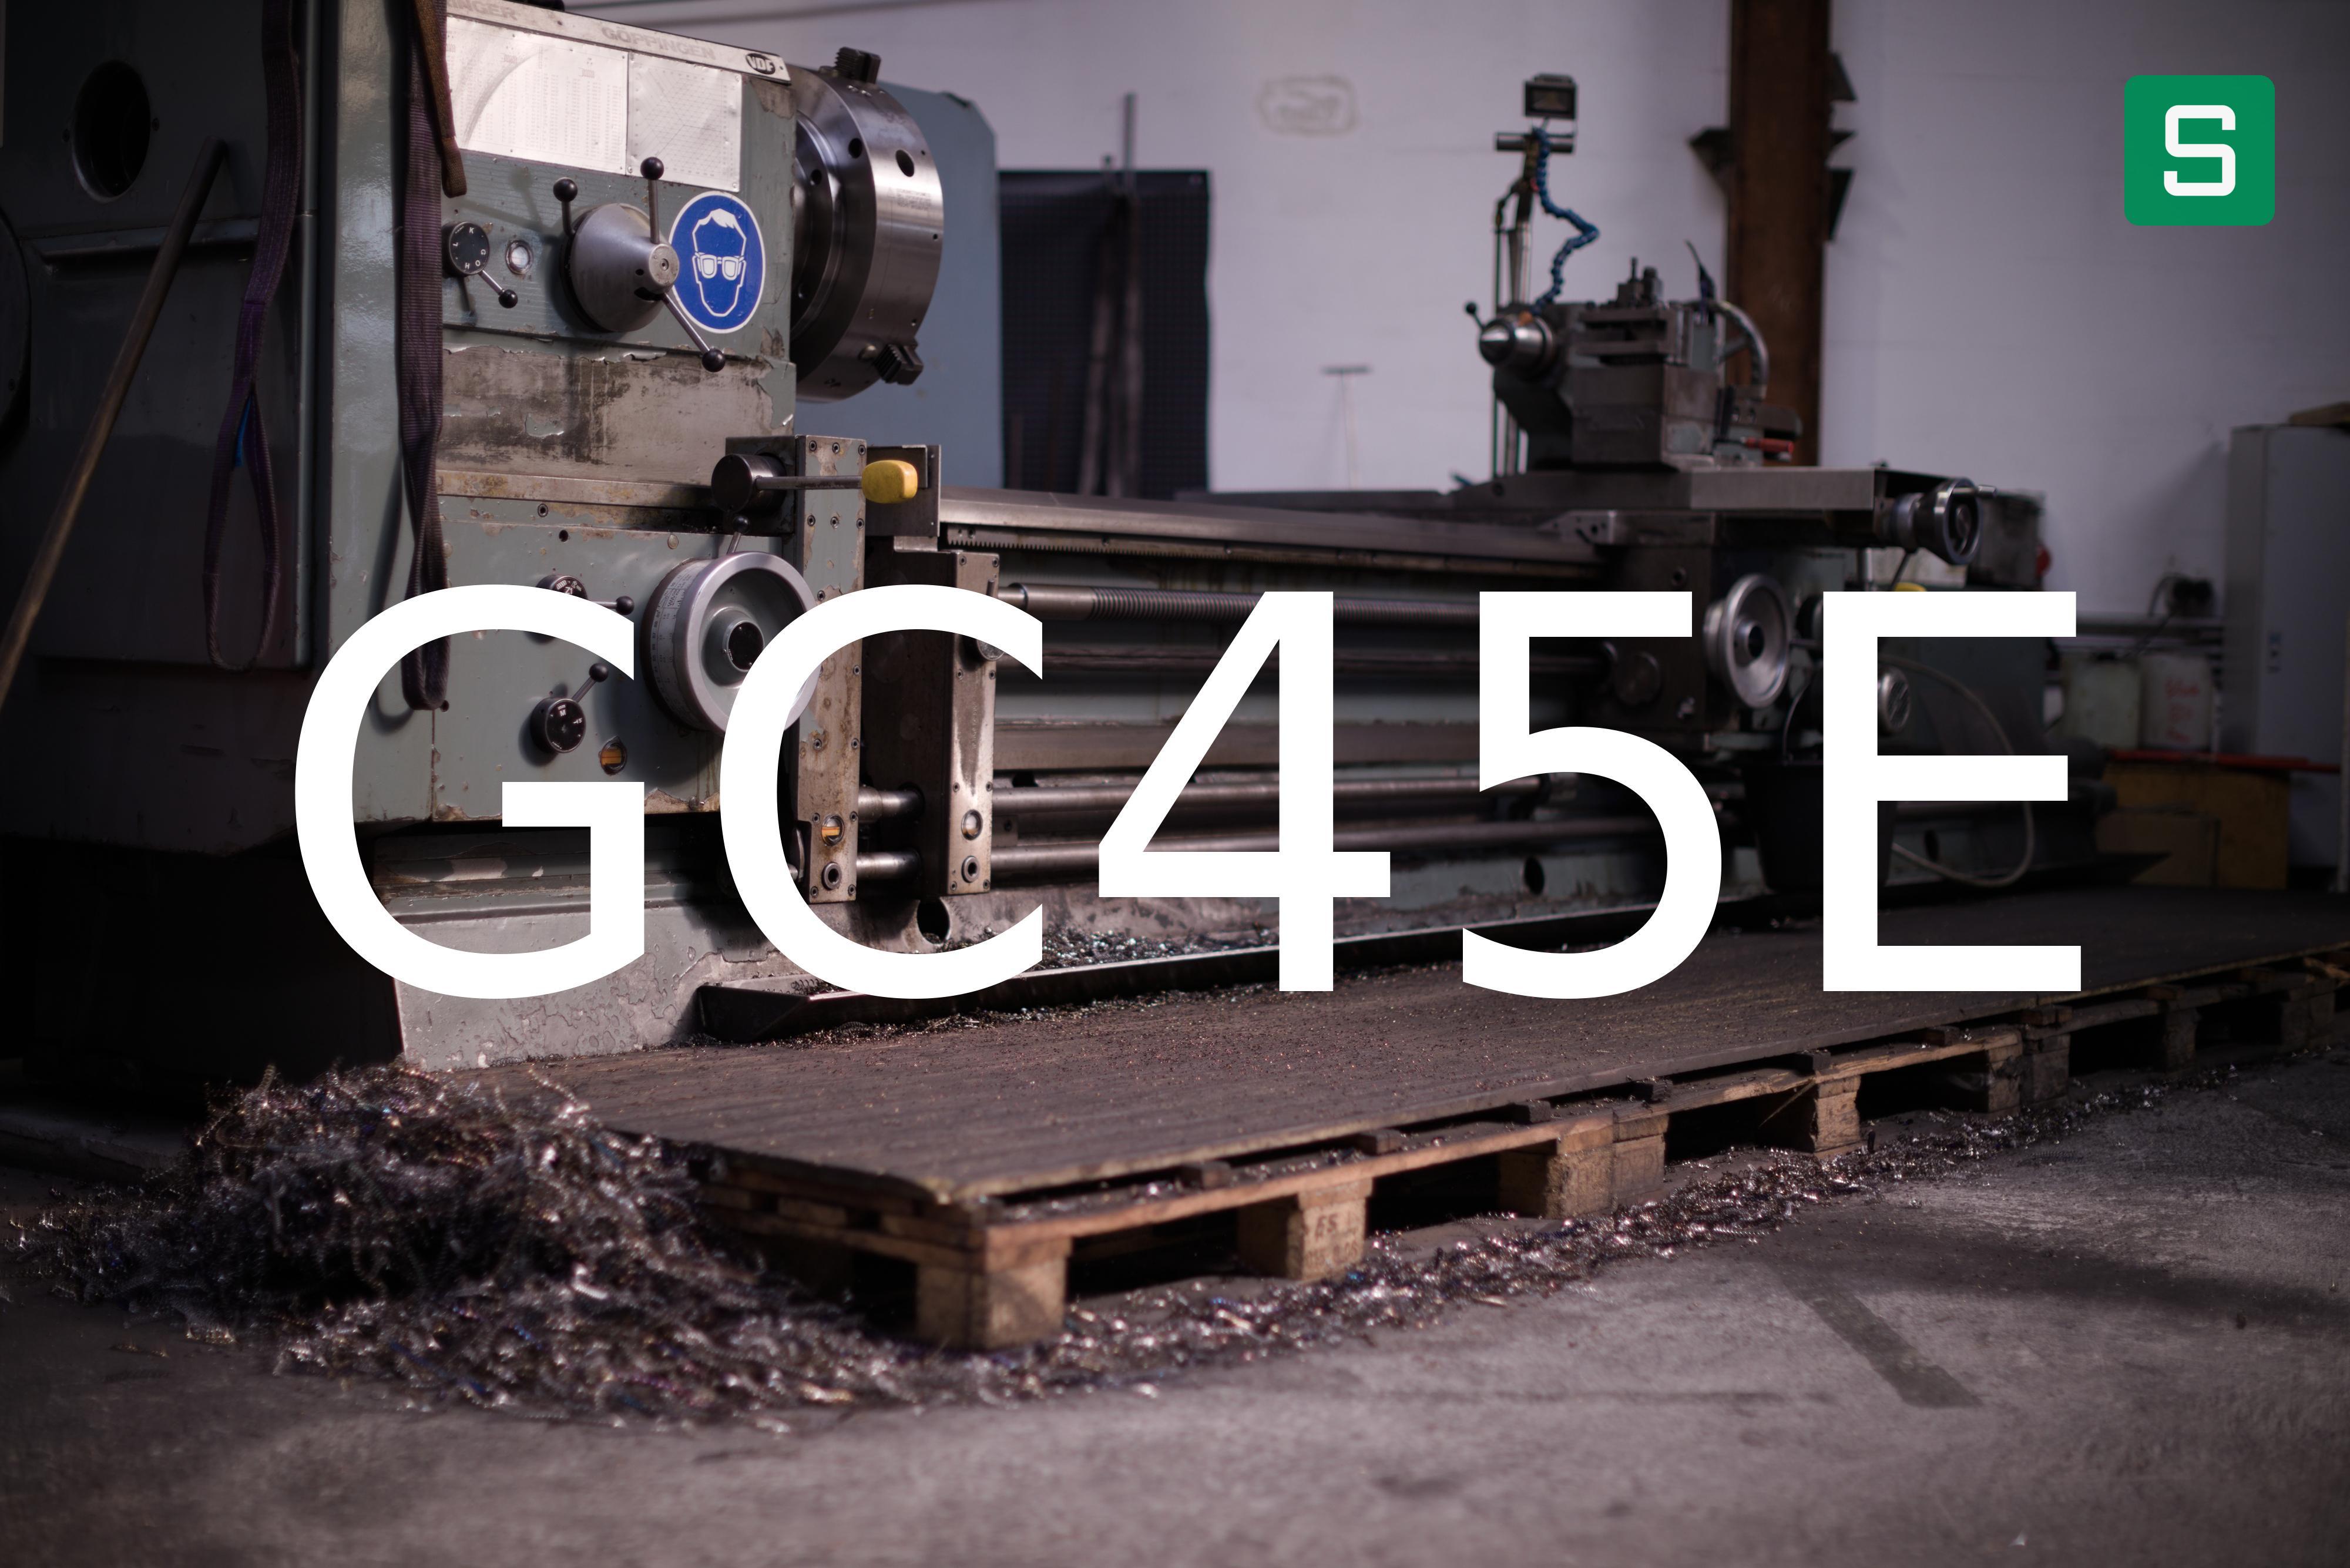 Steel Material: GC45E